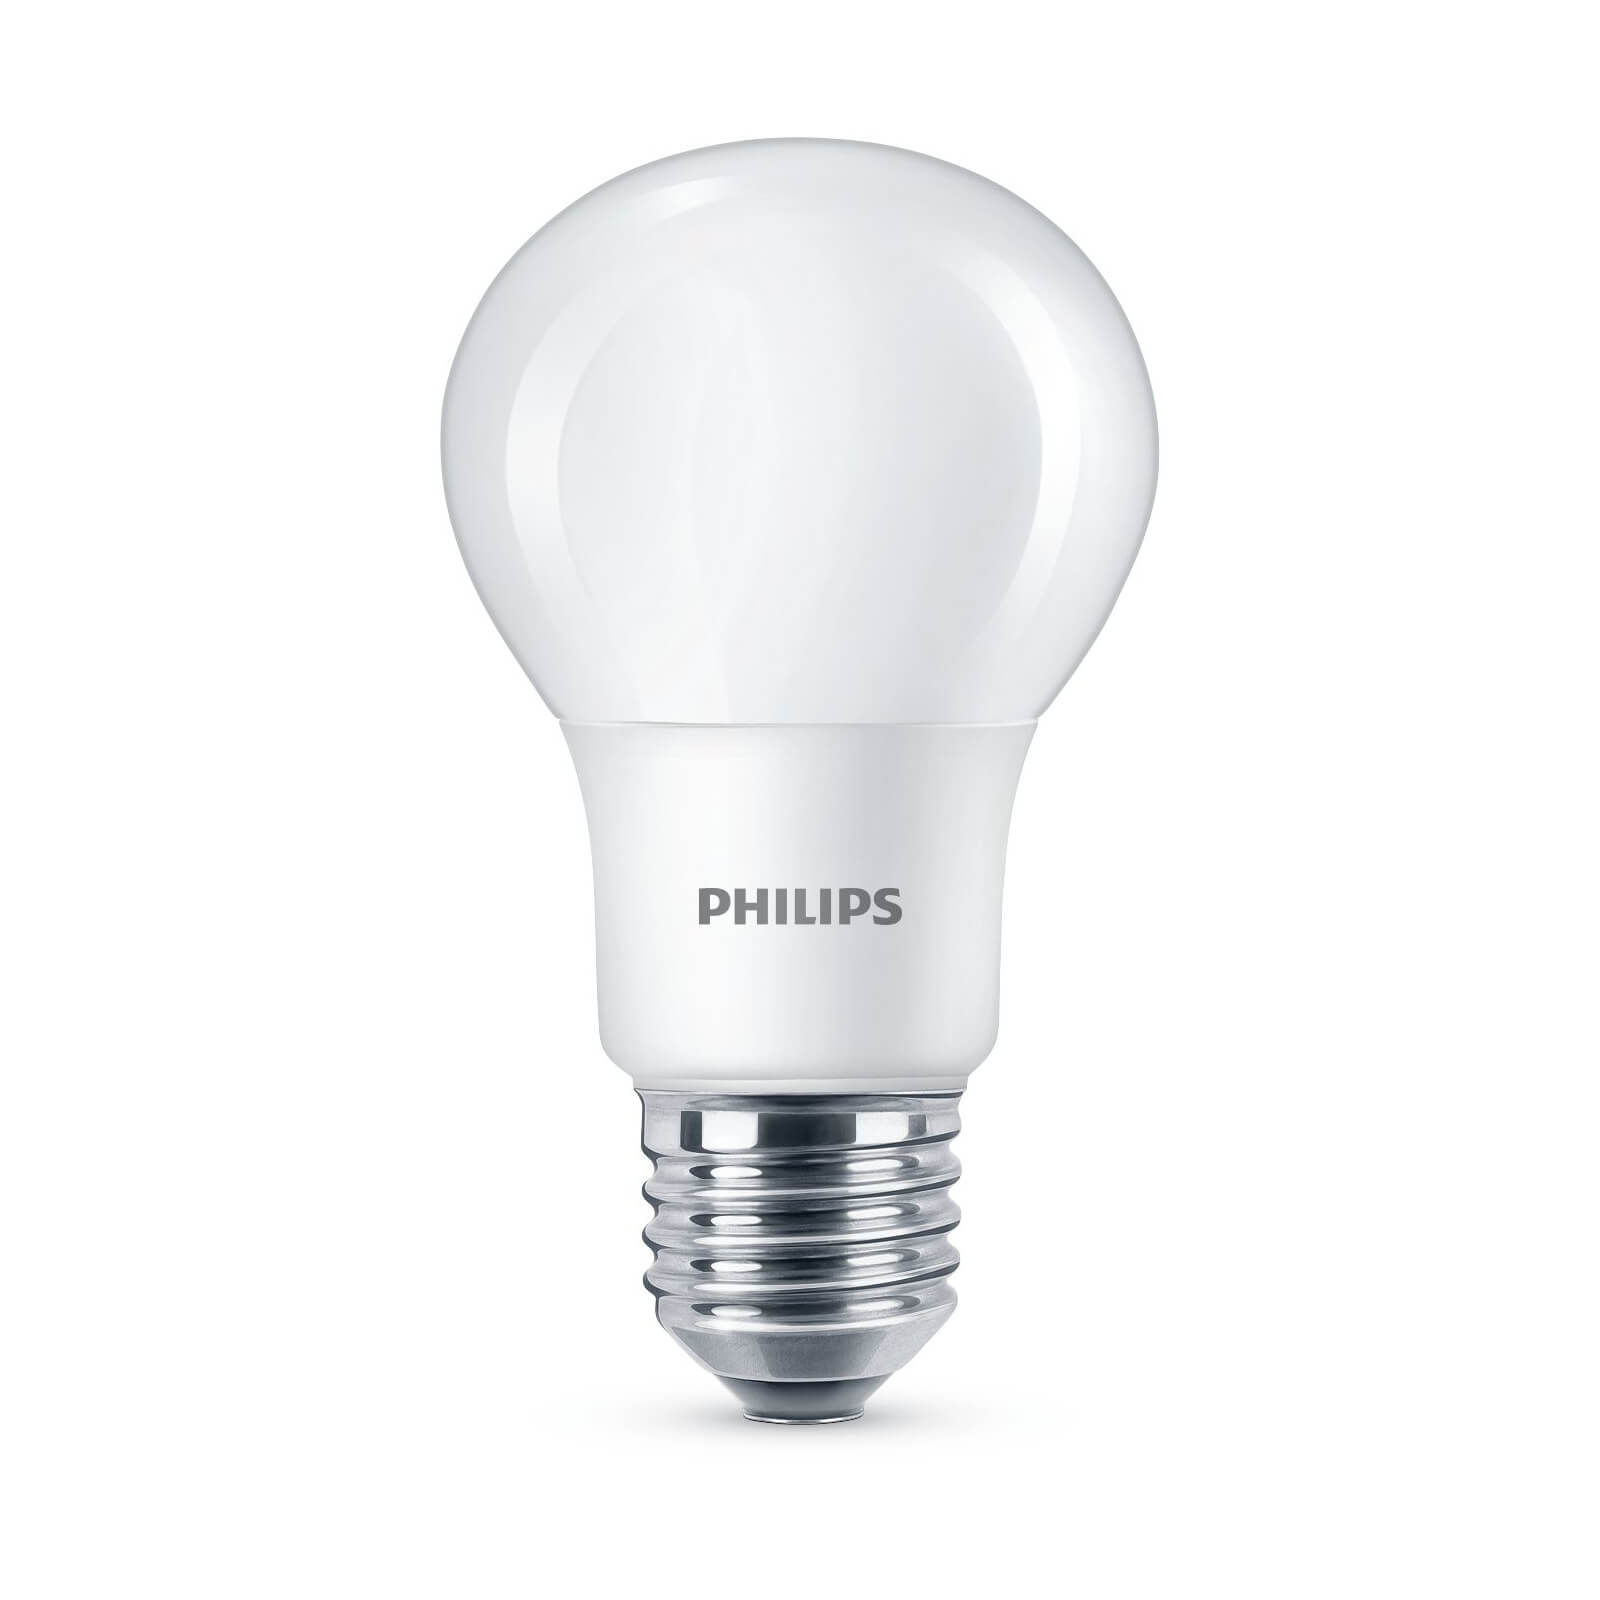 Philips LED Lamp Kogel Mat 8W (60W) E27, set van 3